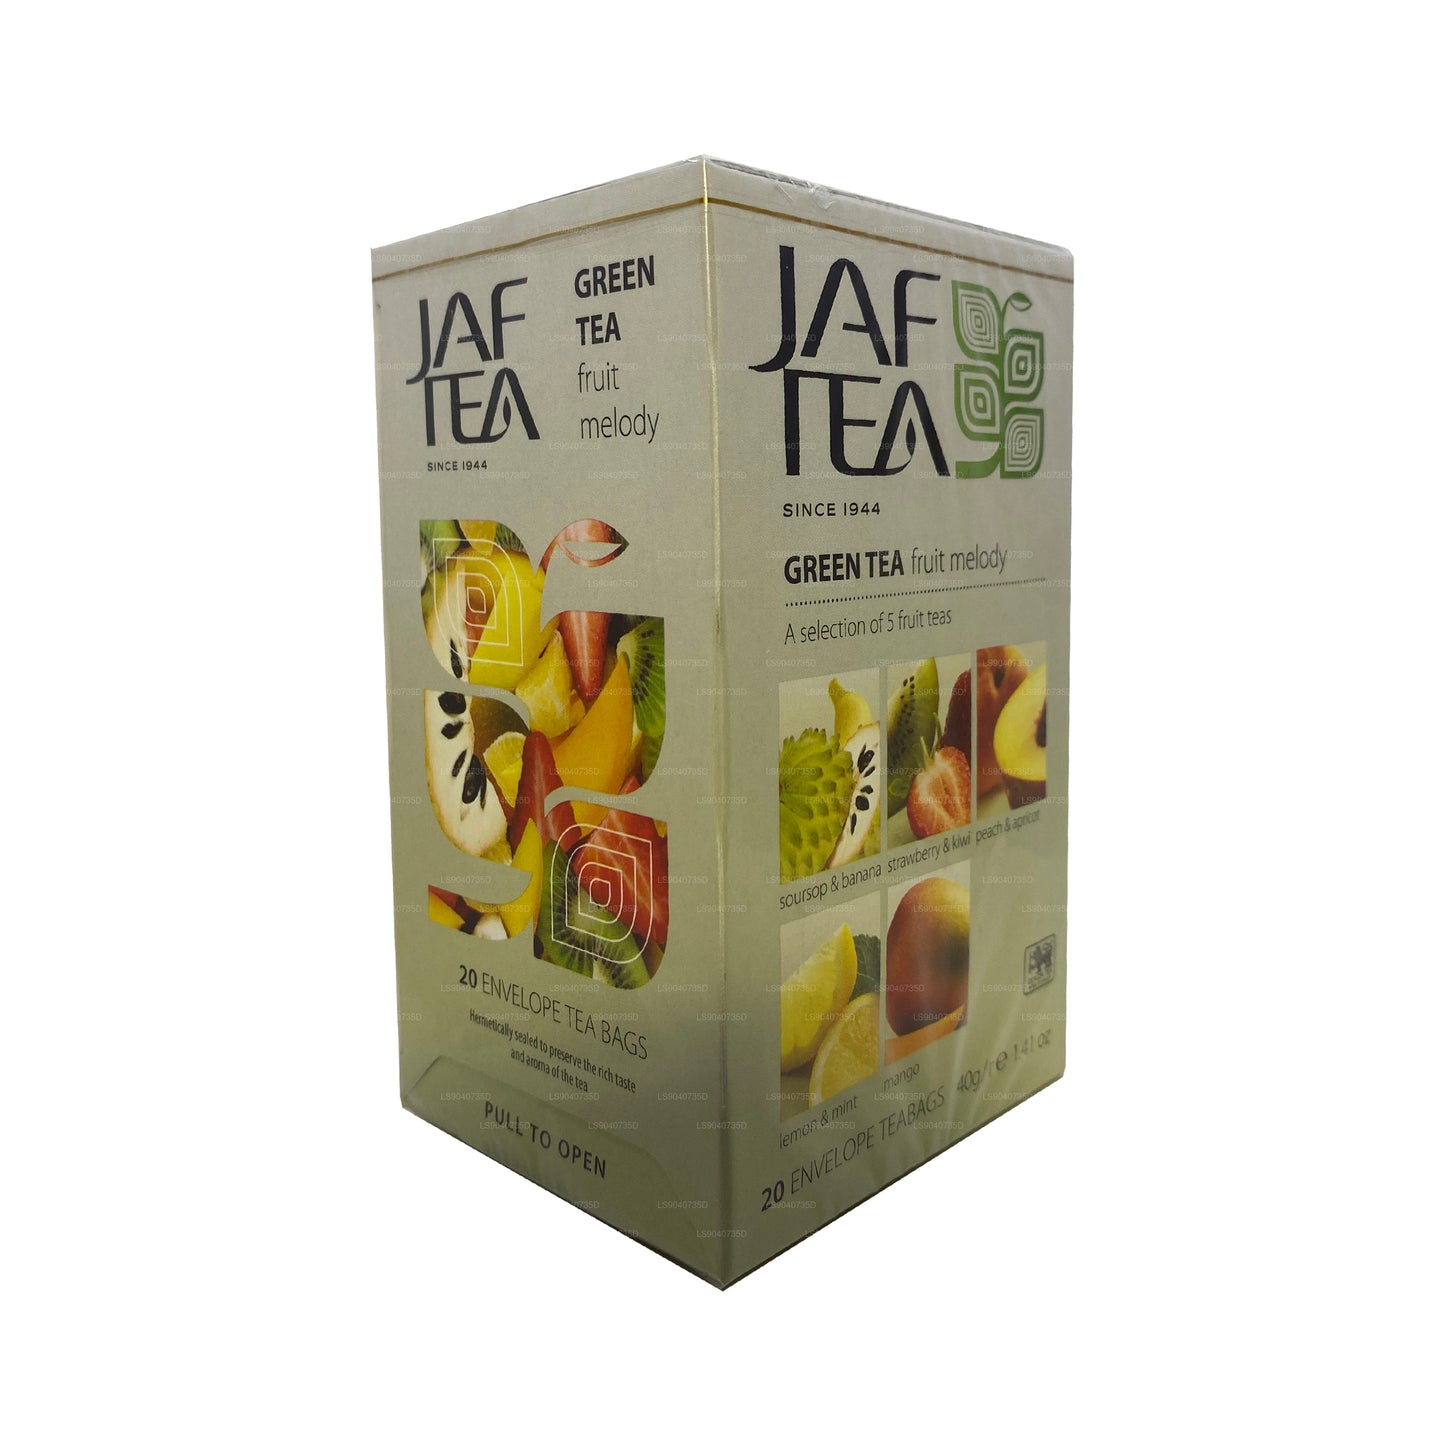 Jaf Tea Pure Green Kolekcja Zielona Herbata Owocowa Melodia (40g) 20 torebek herbaty